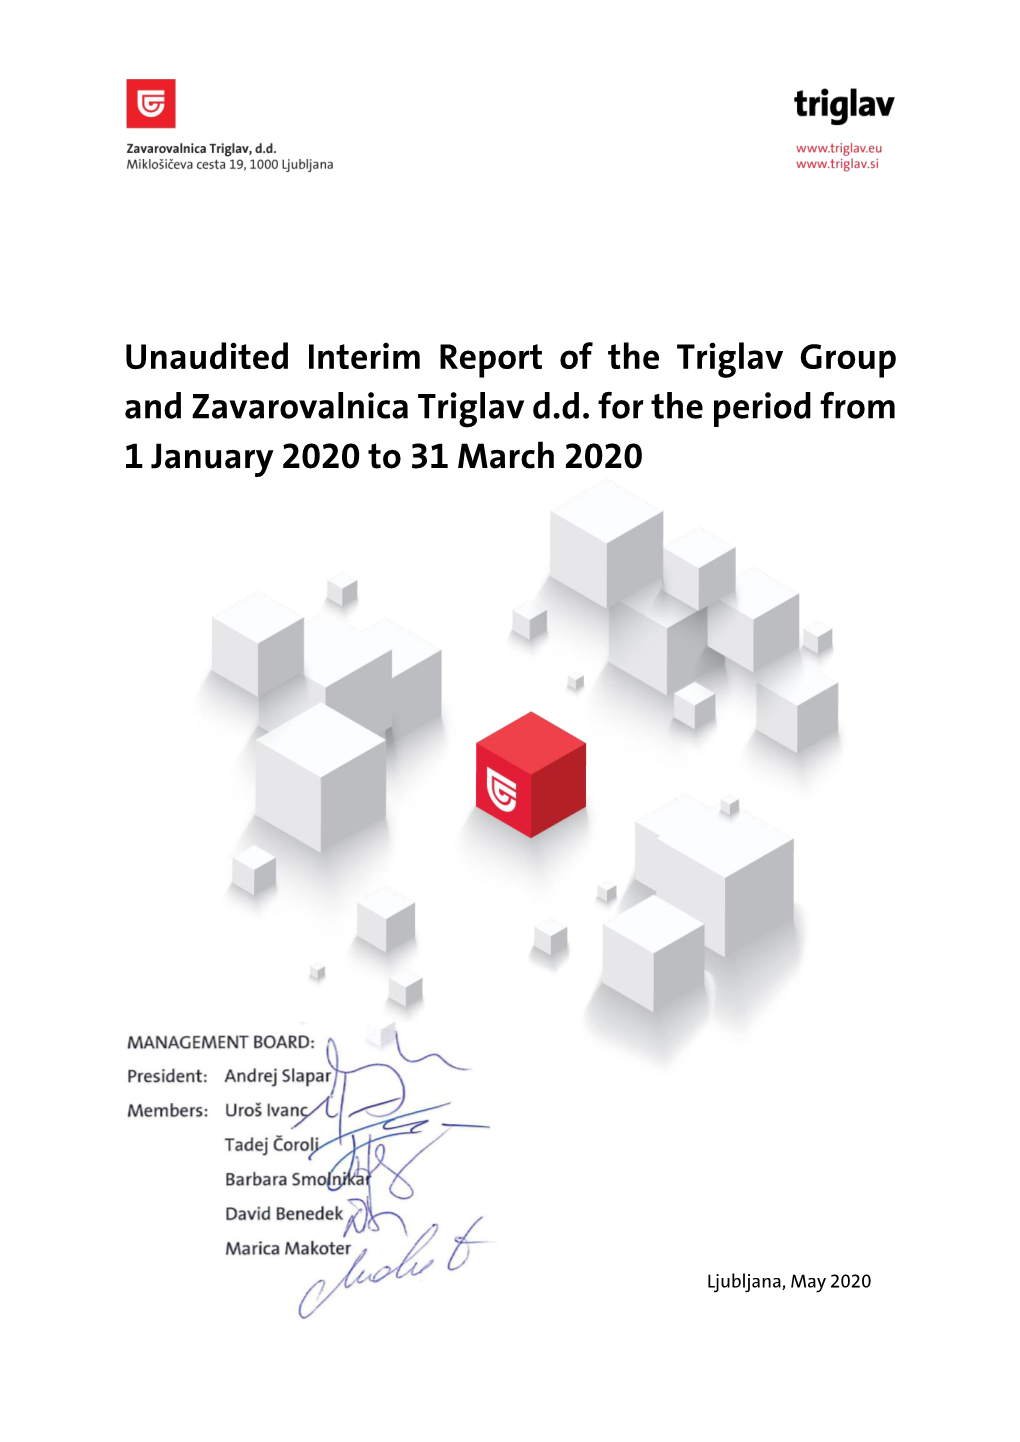 Unaudited Interim Report of the Triglav Group and Zavarovalnica Triglav D.D